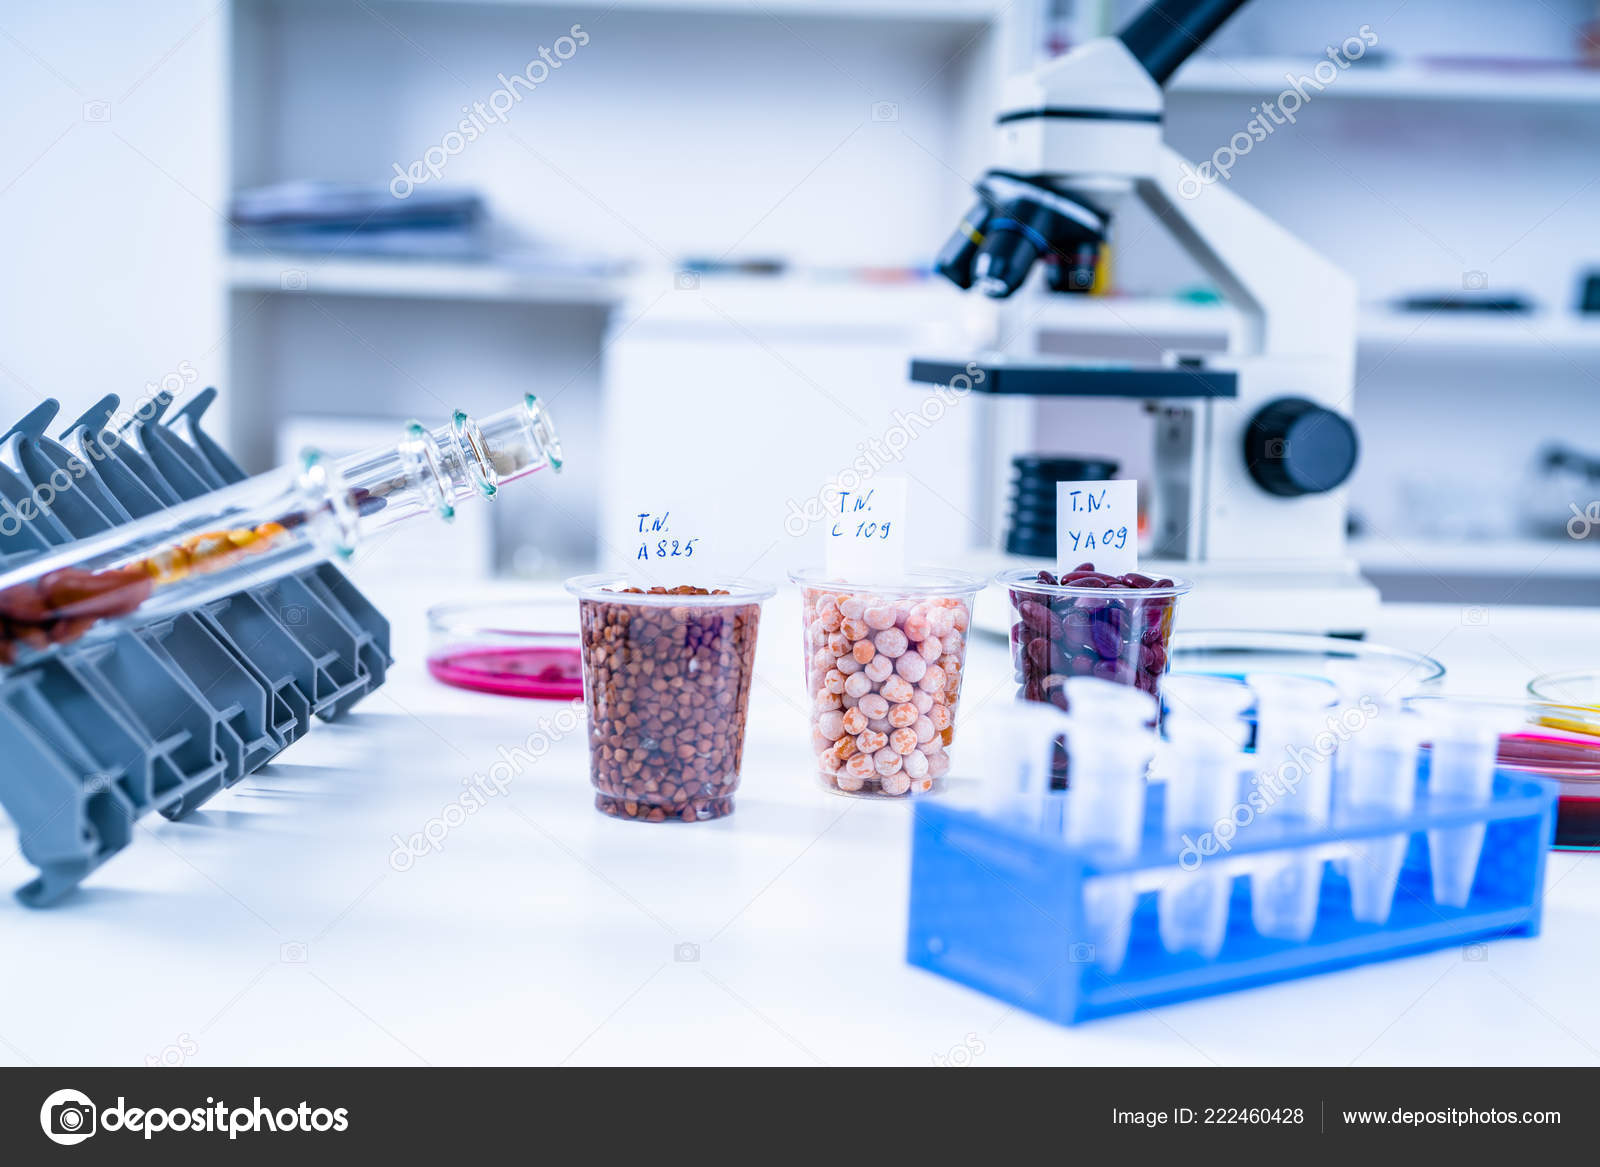 Medical Laboratory Equipment, Chemistry Lab Supplies, Testing